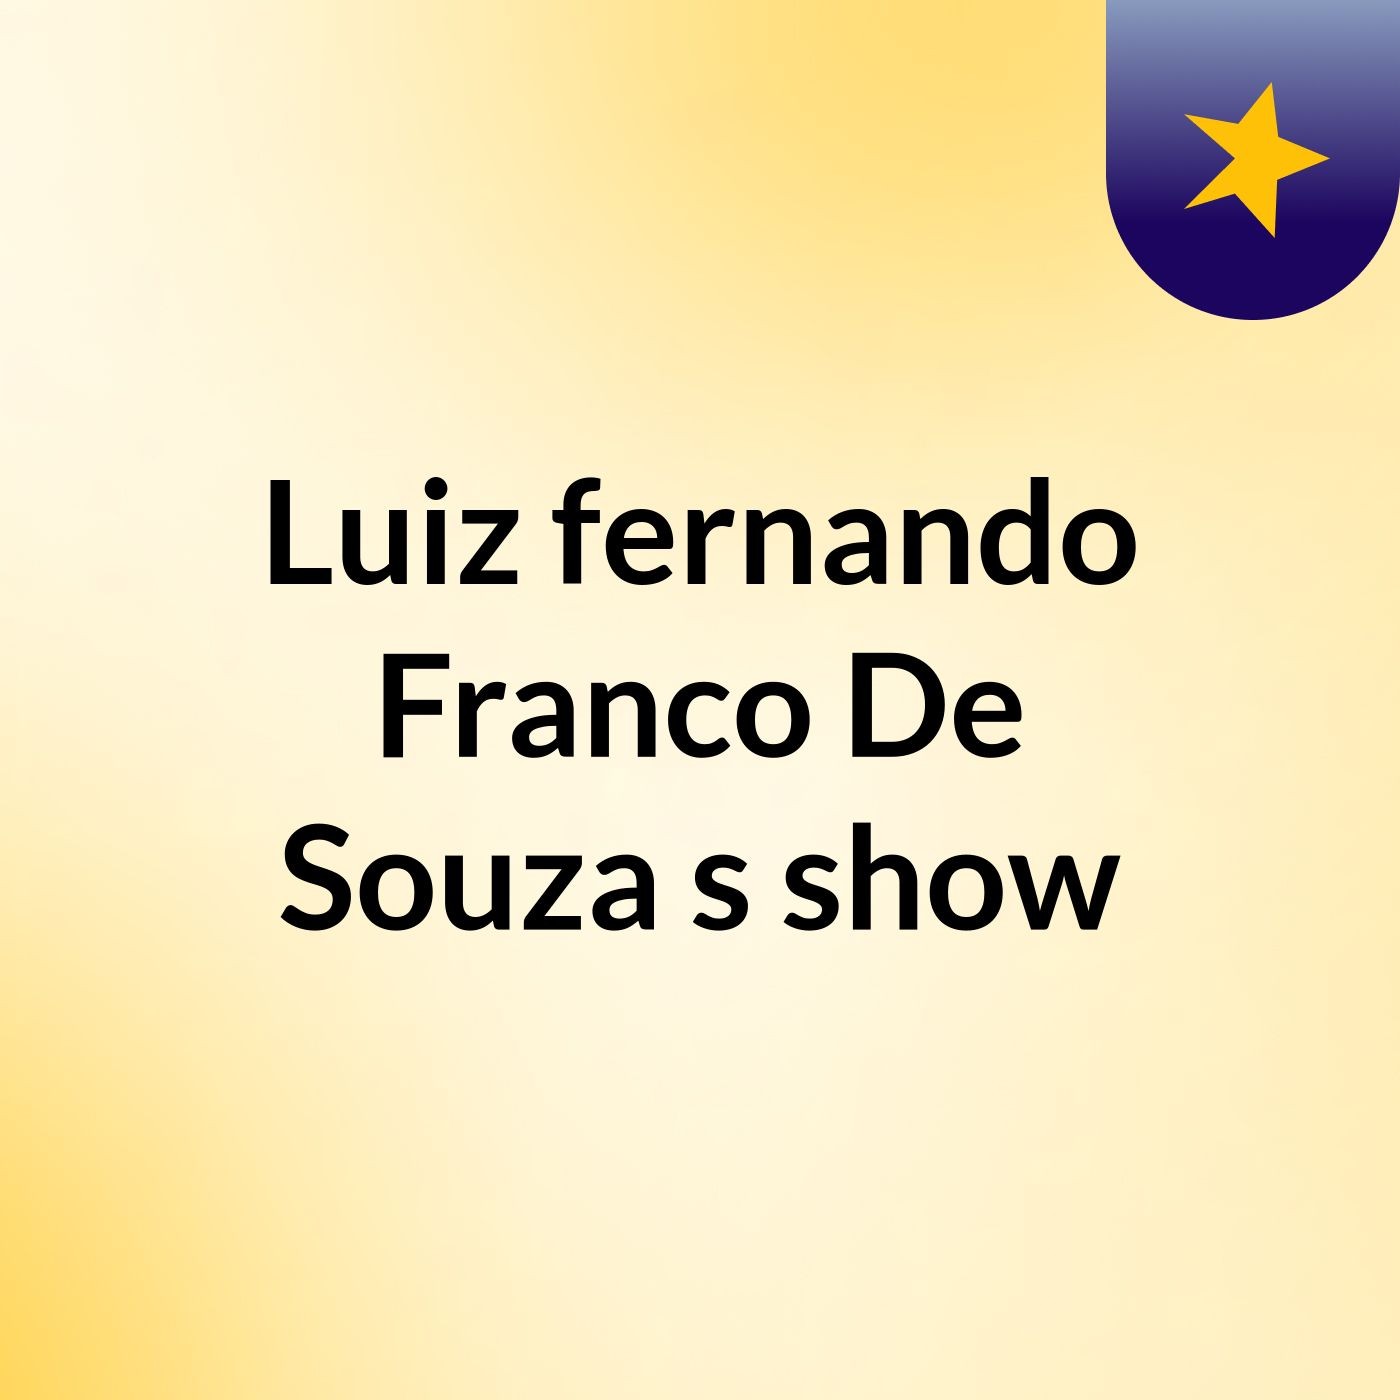 Luiz fernando Franco De Souza's show